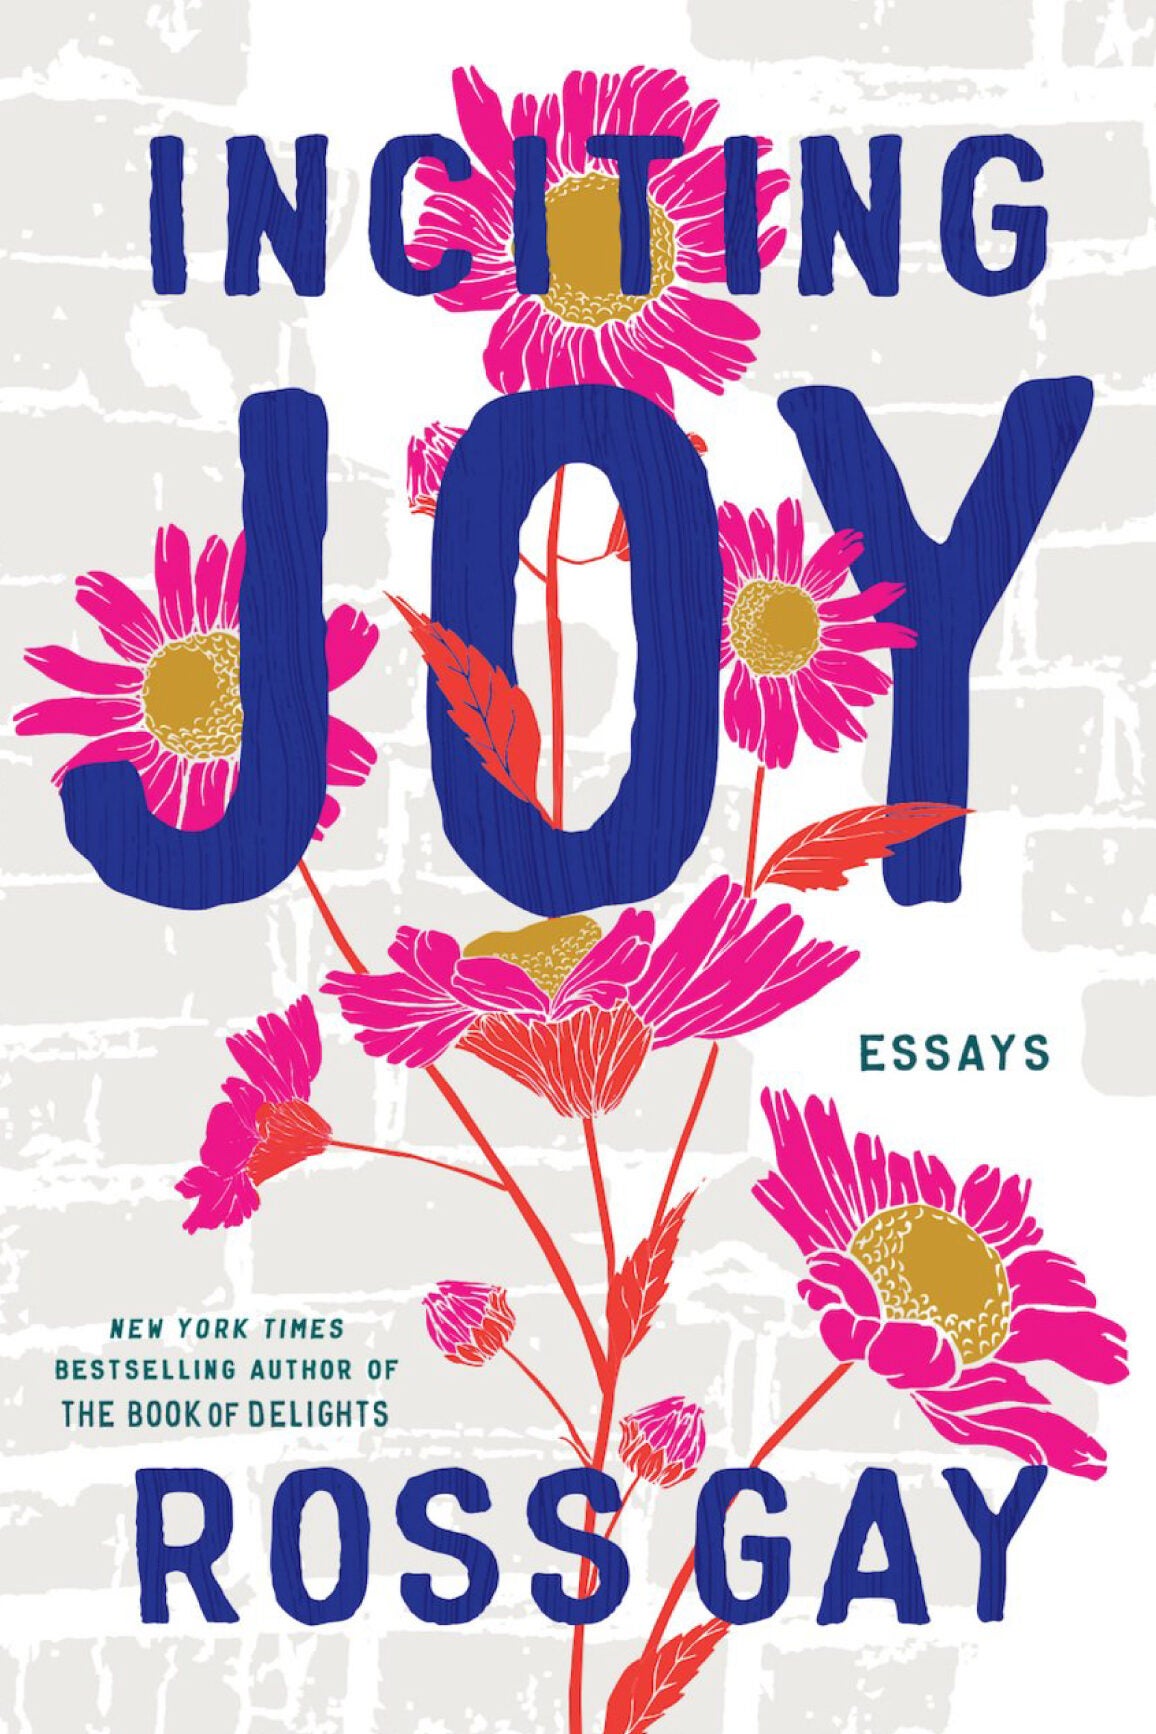 Book cover: "Inciting Joy."